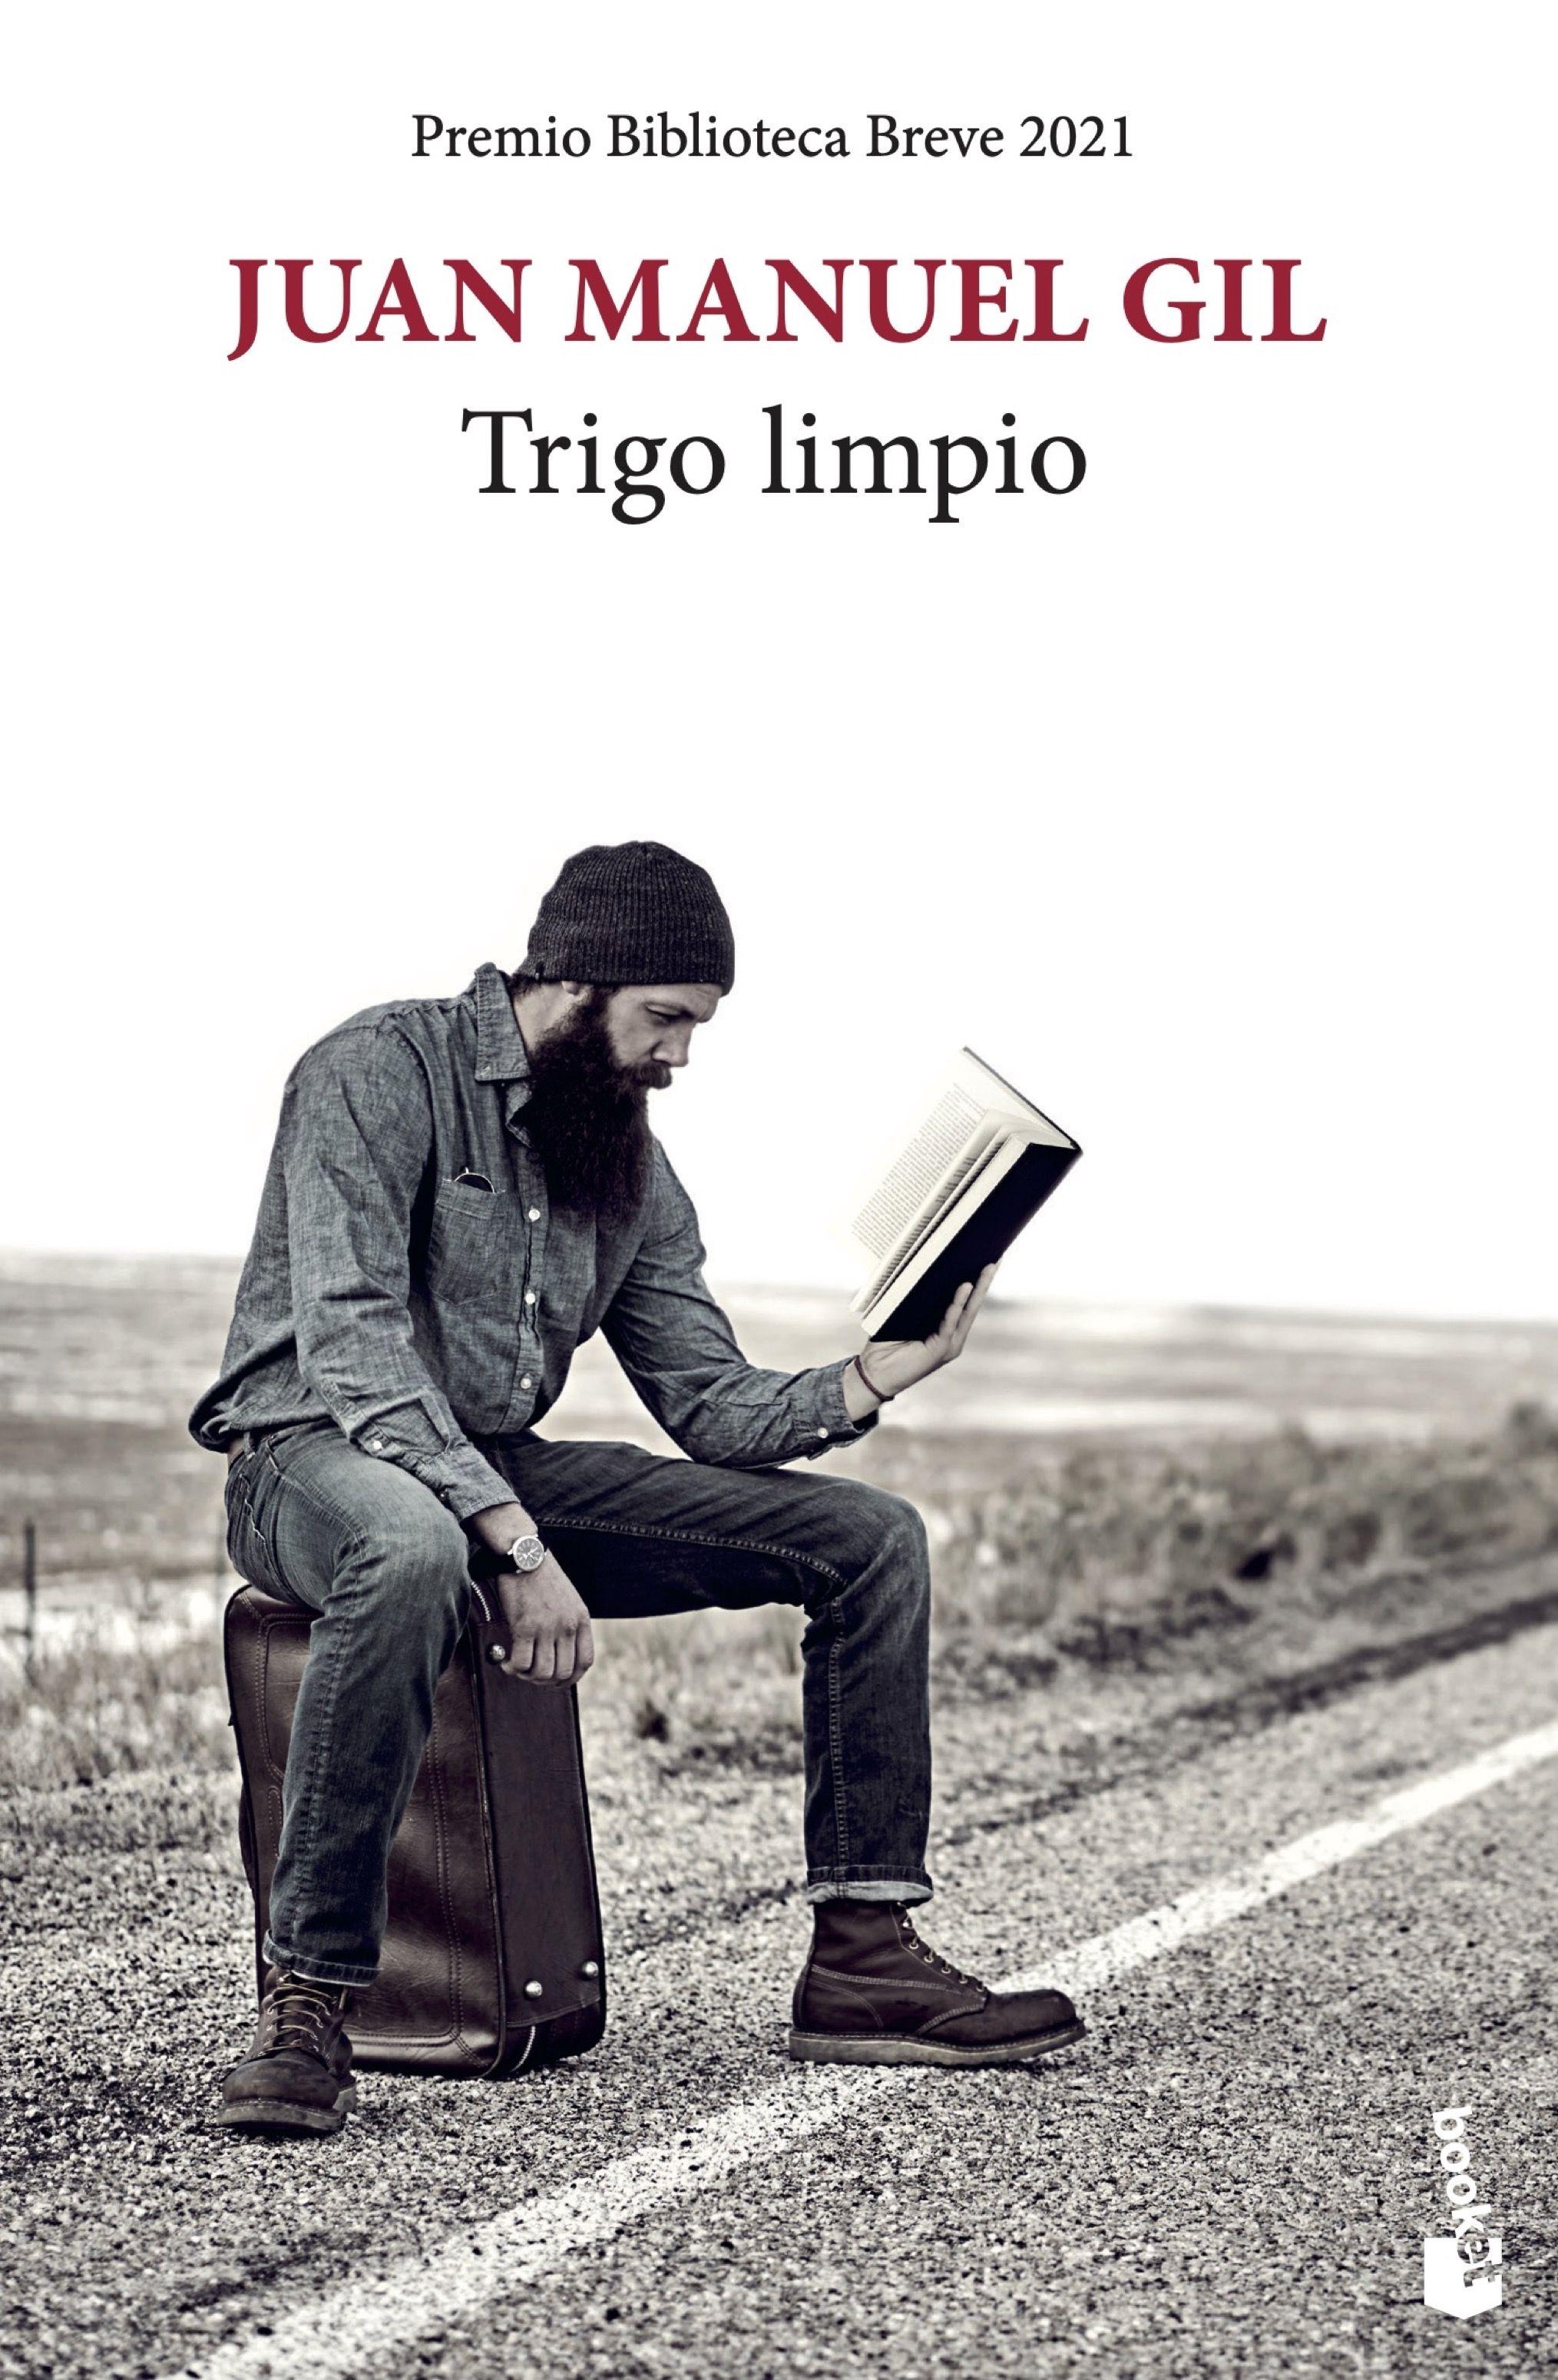 Trigo Limpio "Premio Biblioteca Breve 2021". 